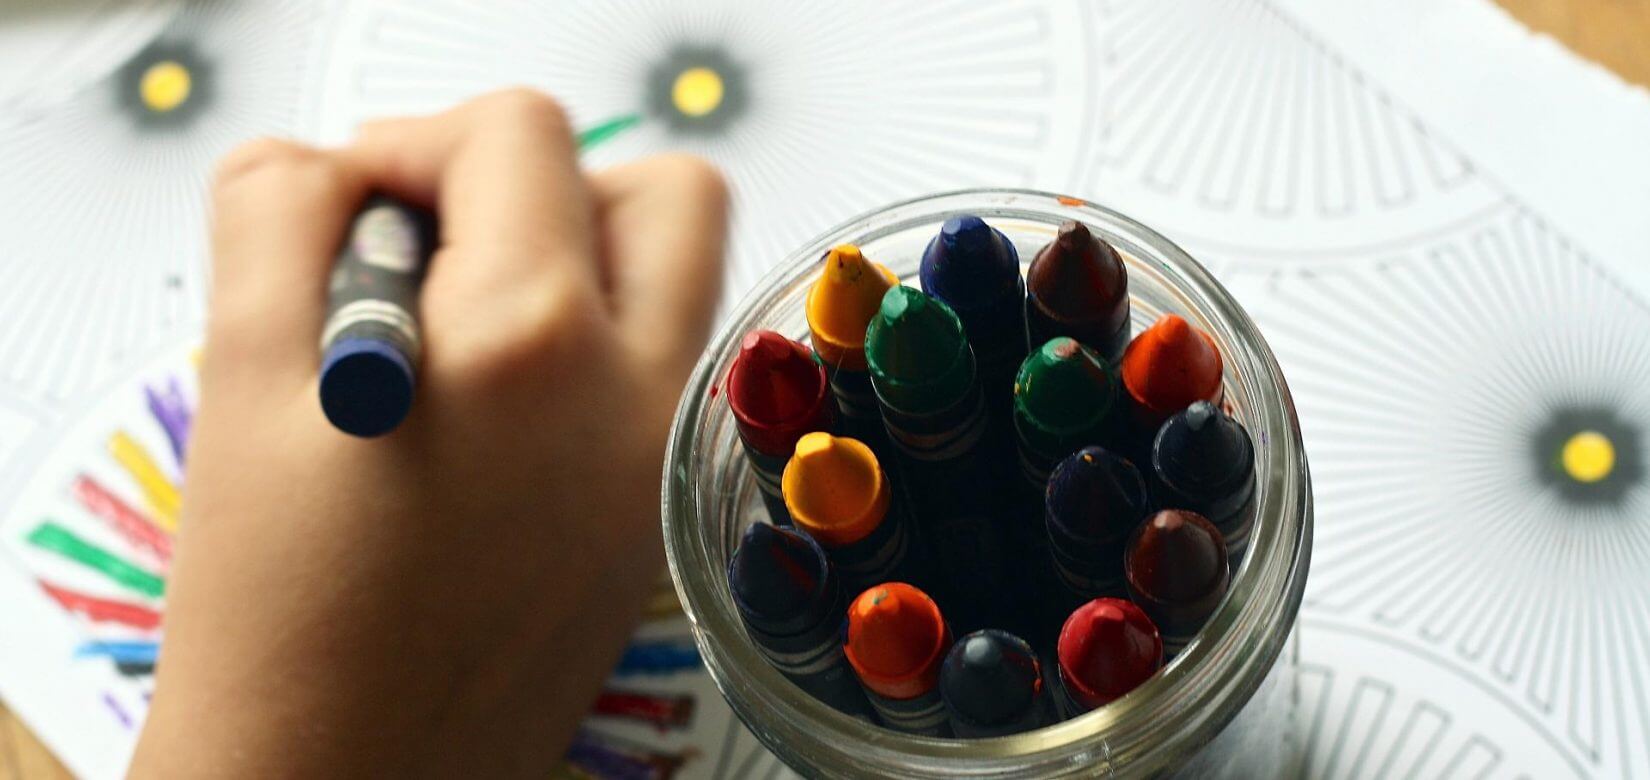 H παιδοψυχολόγος Τζίνα Θανοπούλου μας αποκαλύπτει τι συμβολίζει η επιλογή χρώματος για ένα παιδί!